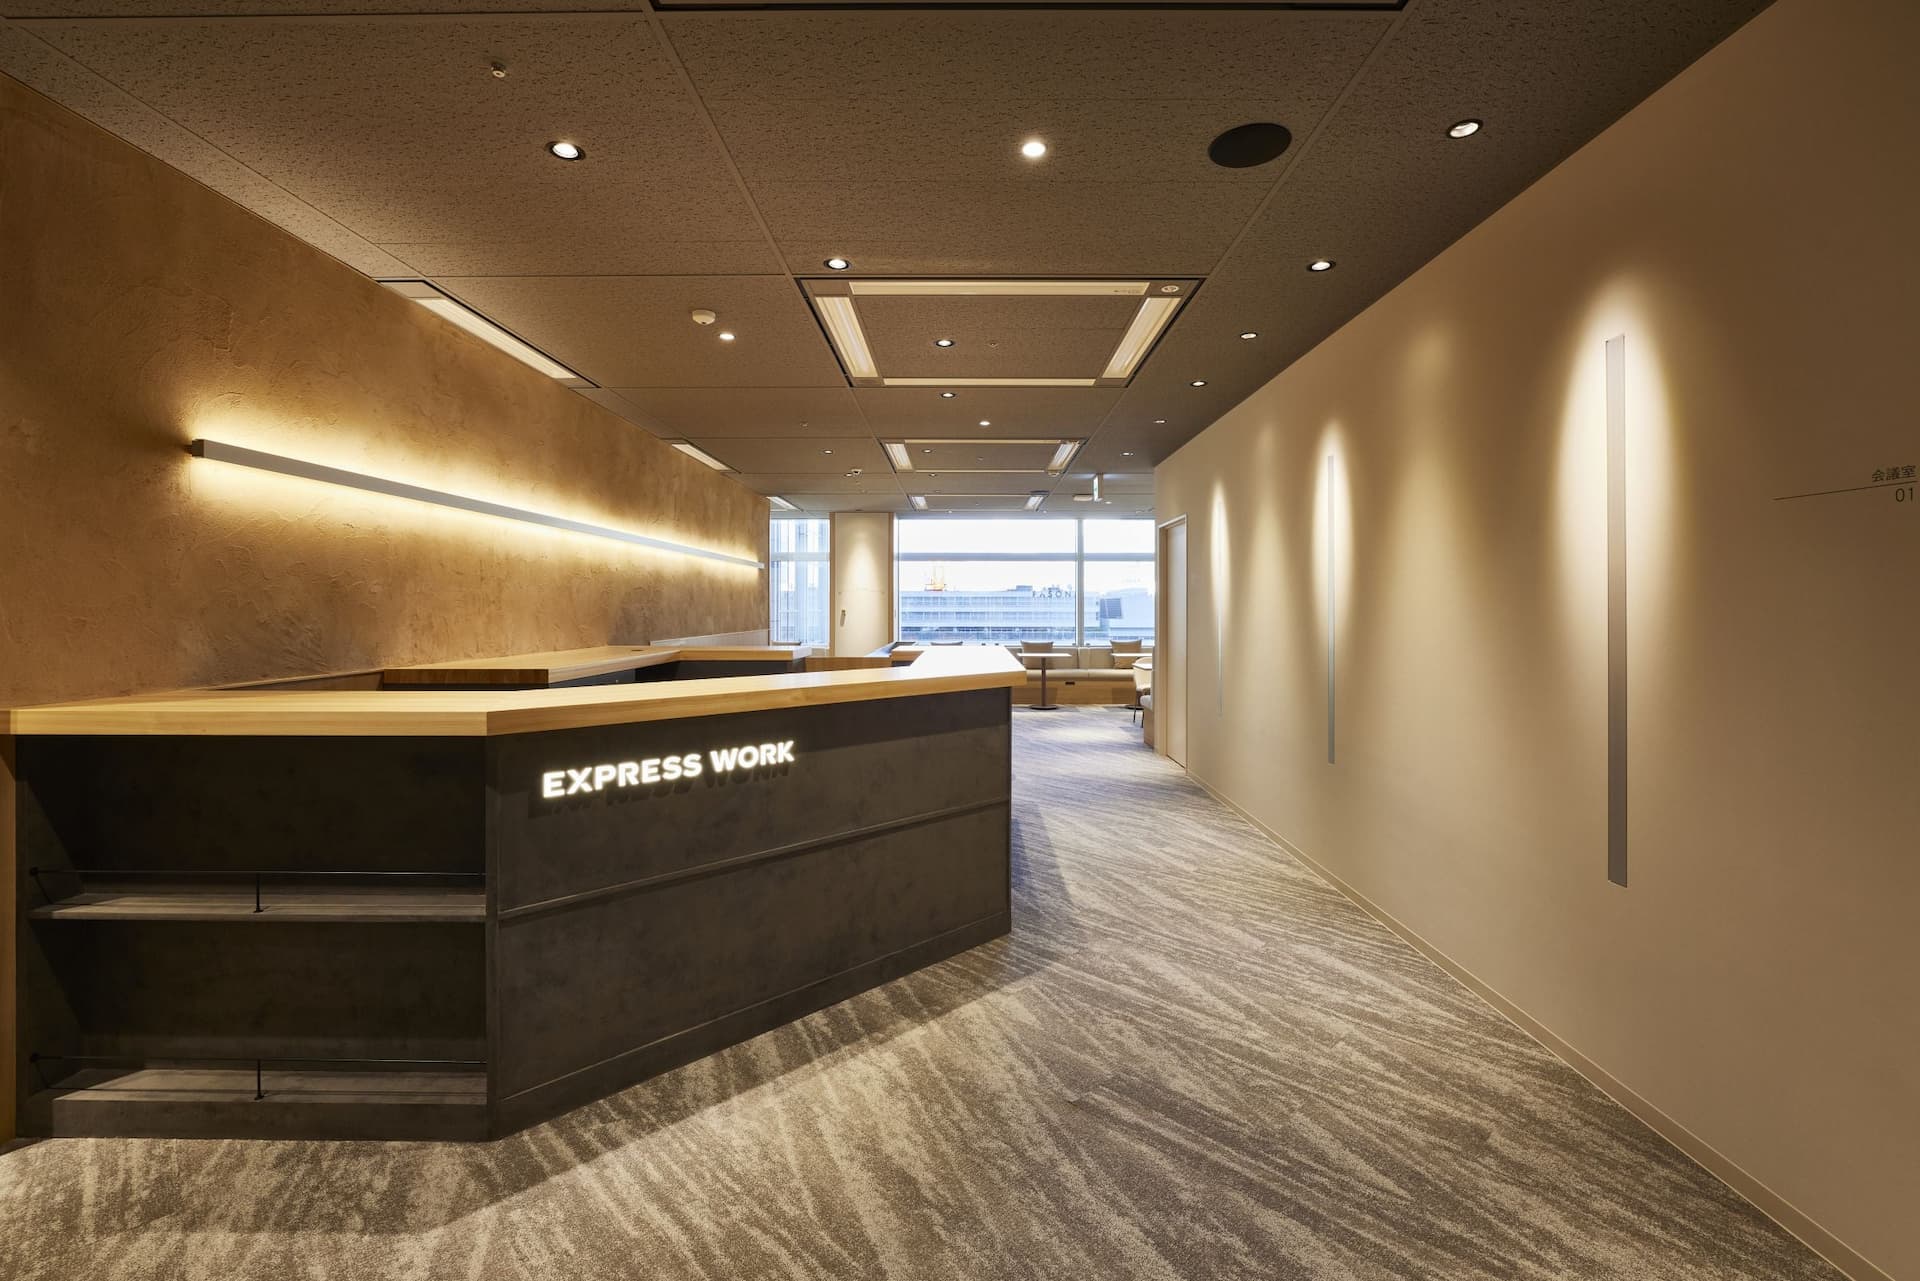 「EXPRESS WORK-Lounge」「EXPRESS WORK-Office」